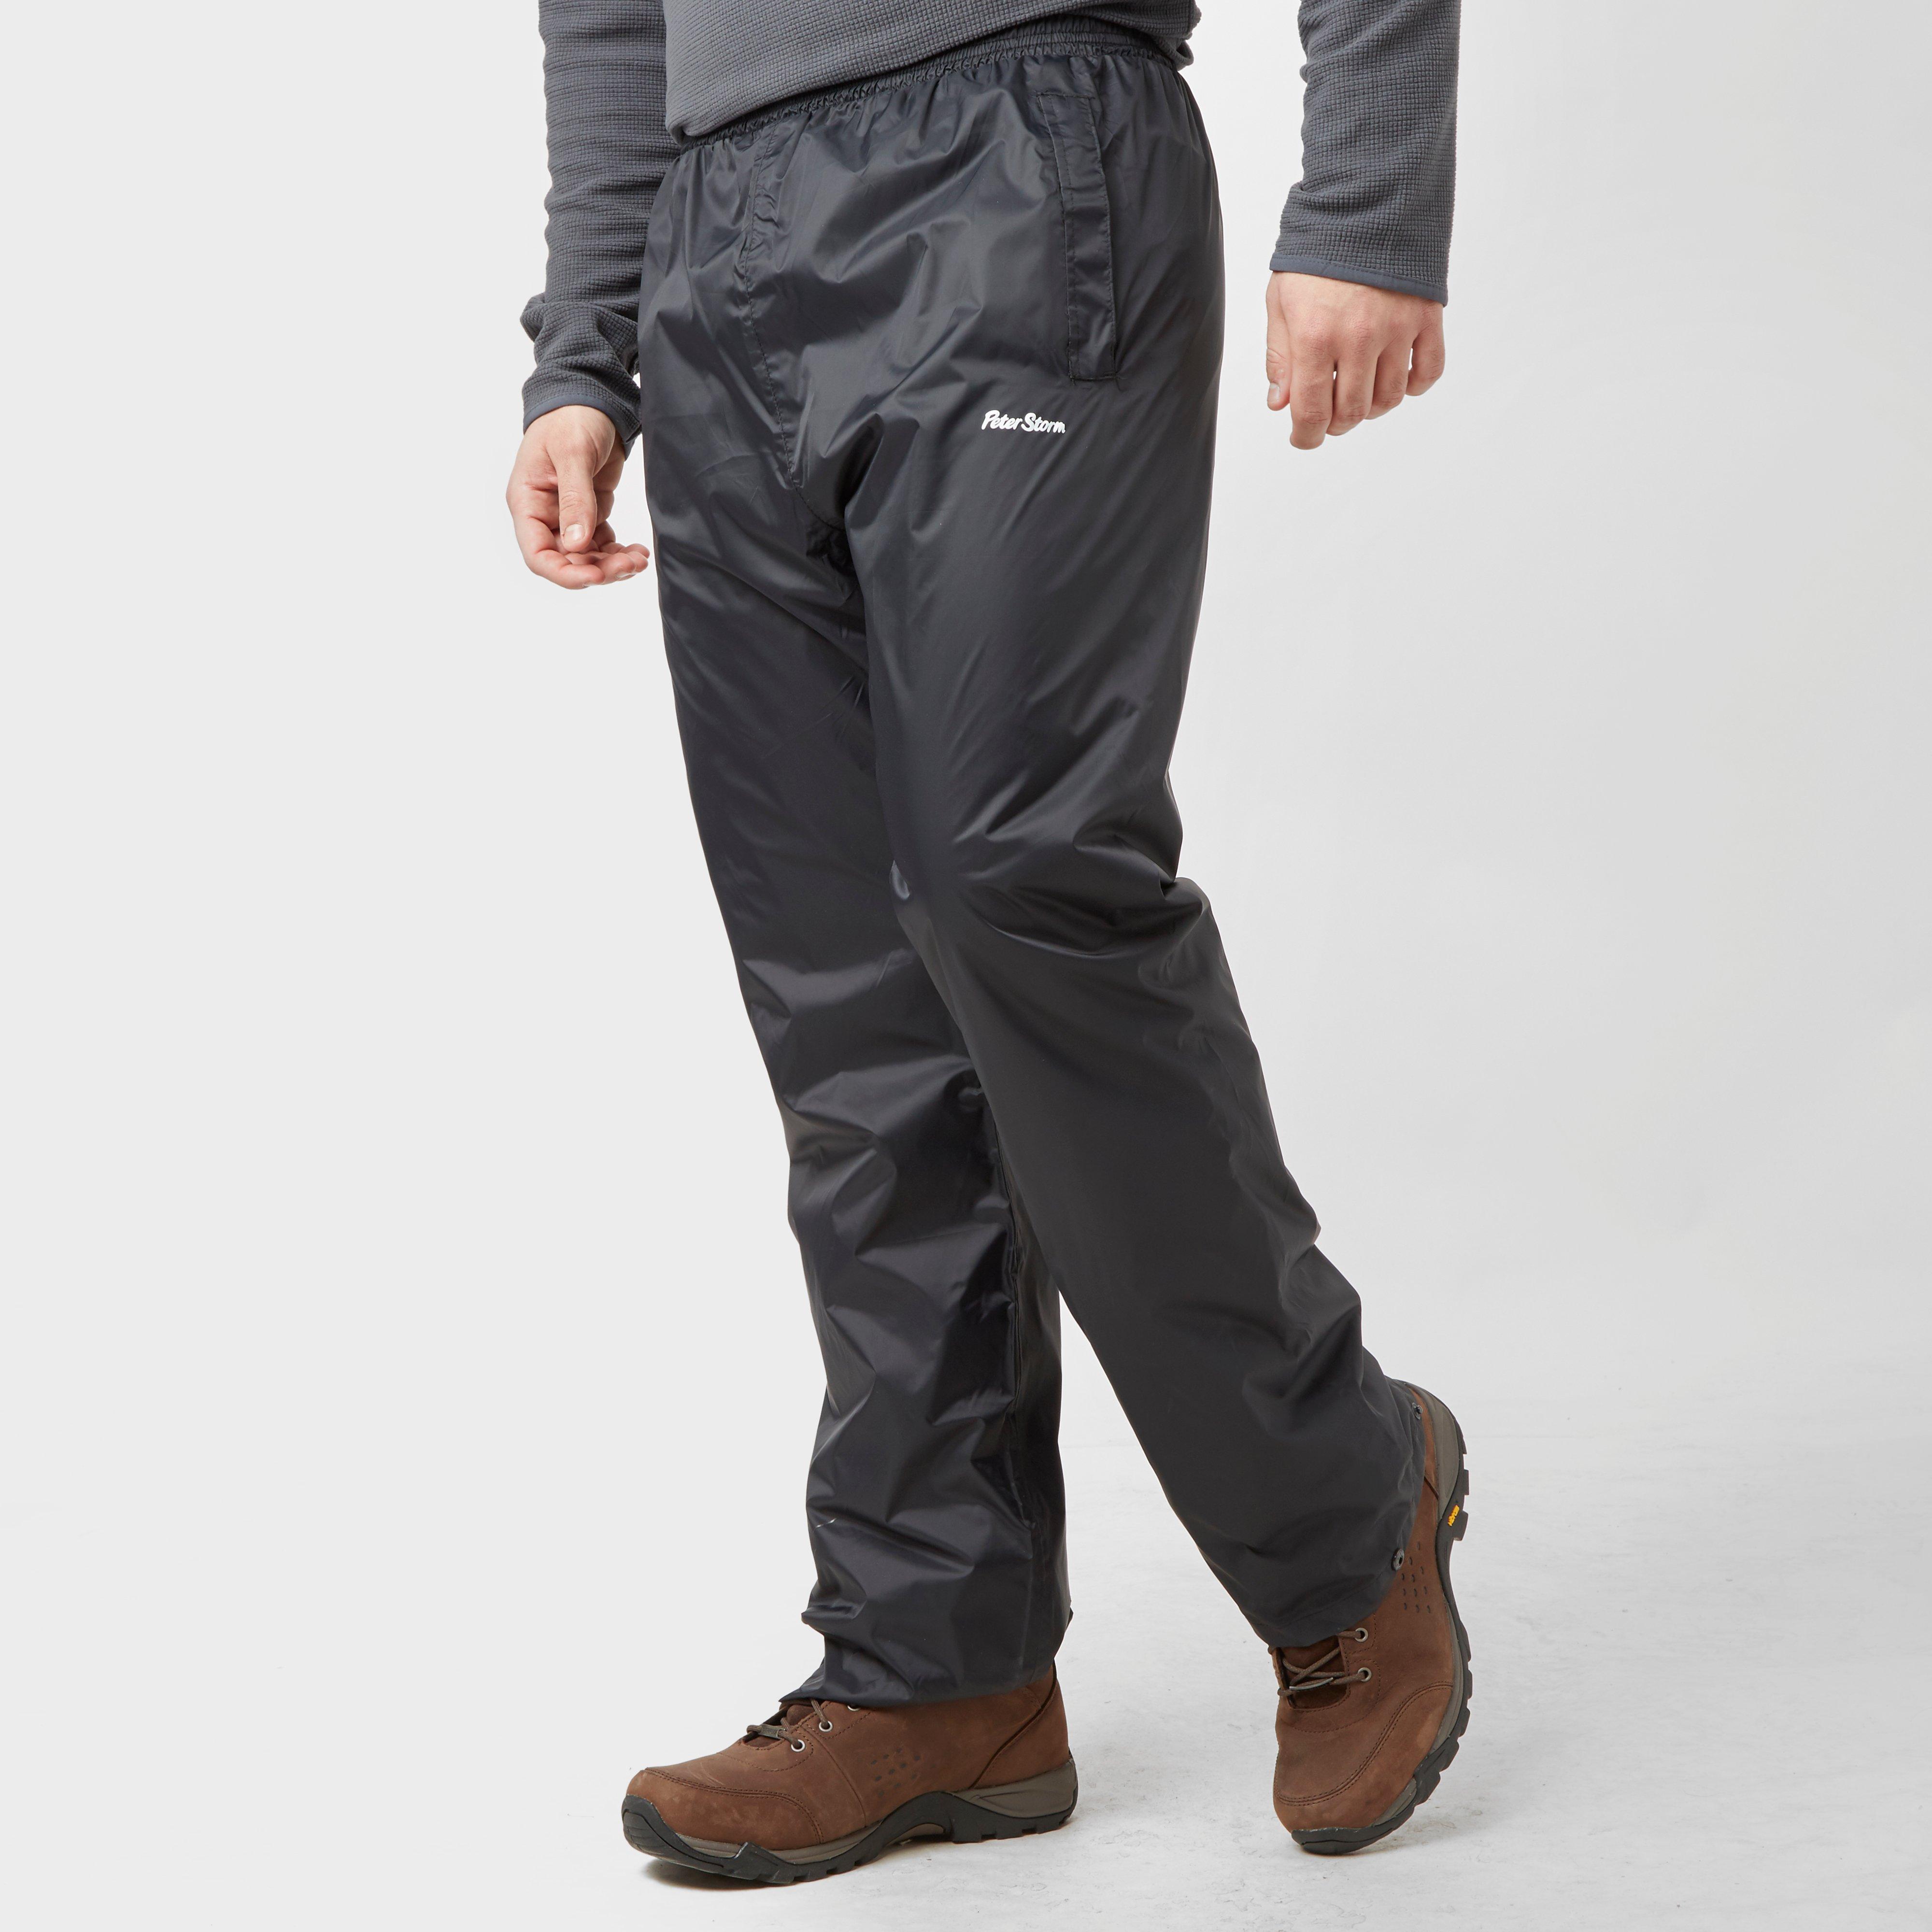 New Peter Storm Men’s Thermal Walking Hiking Pants